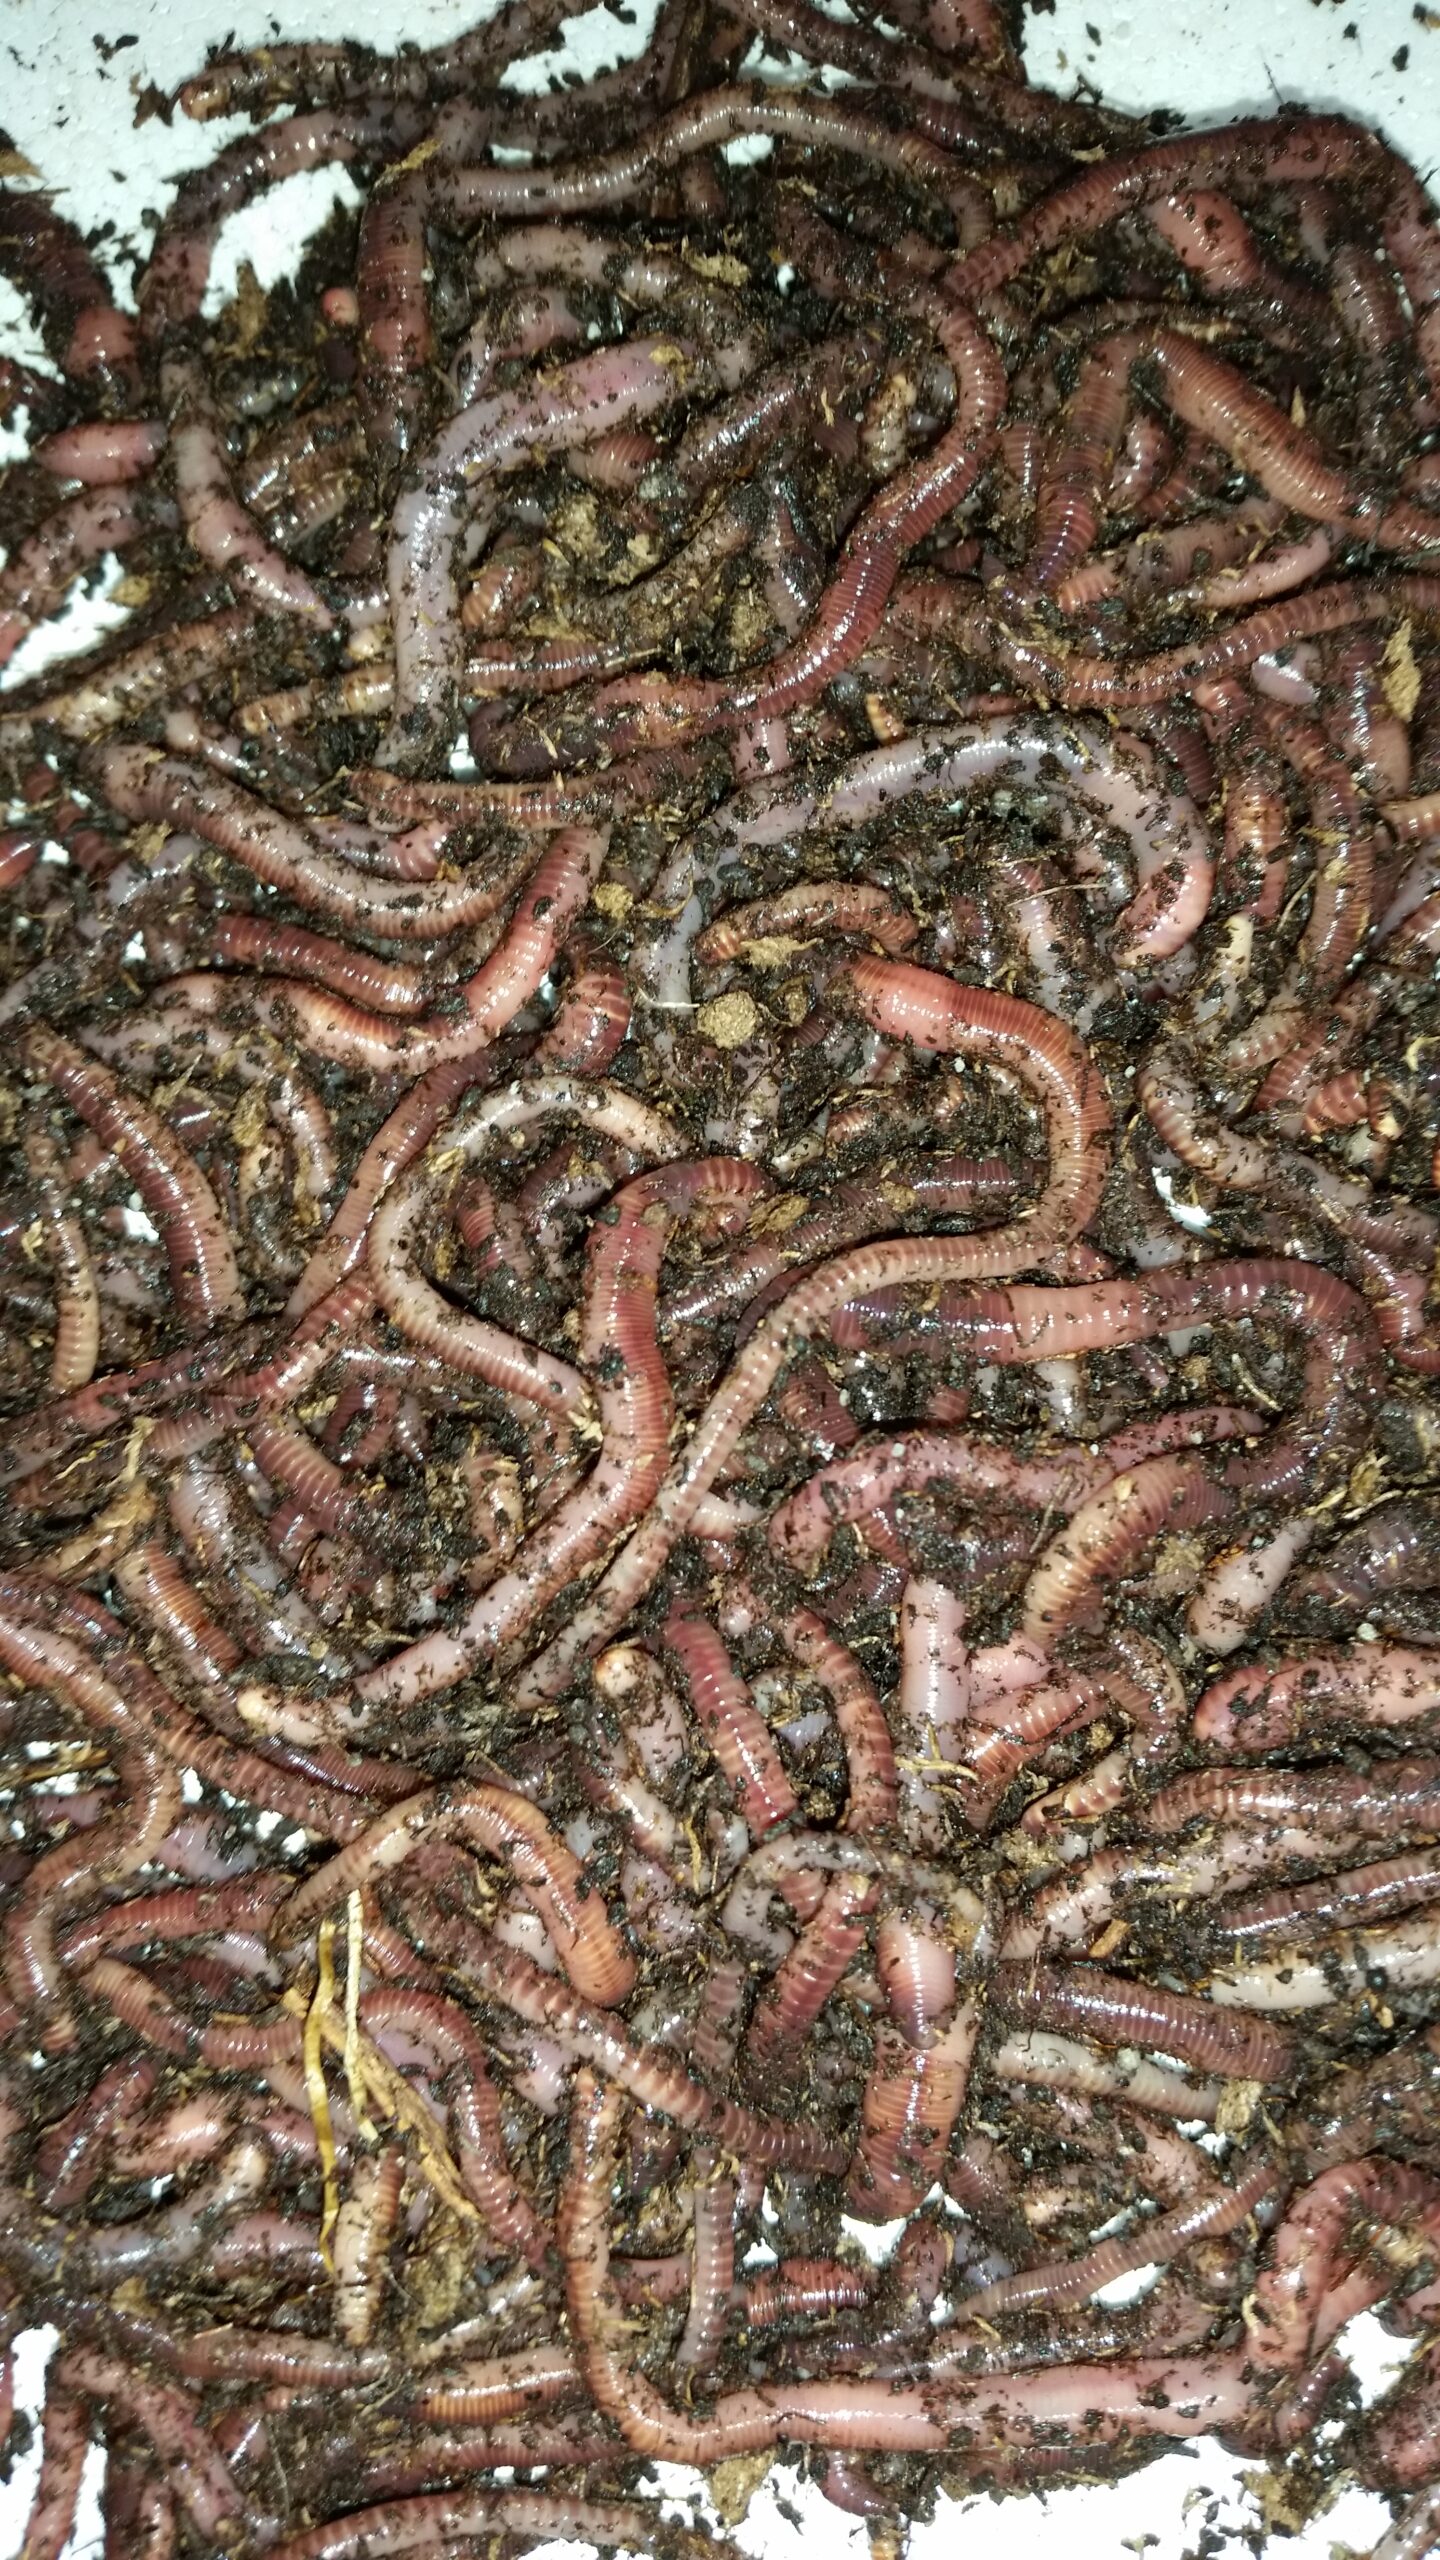 European Nightcrawlers – Keystone Worms